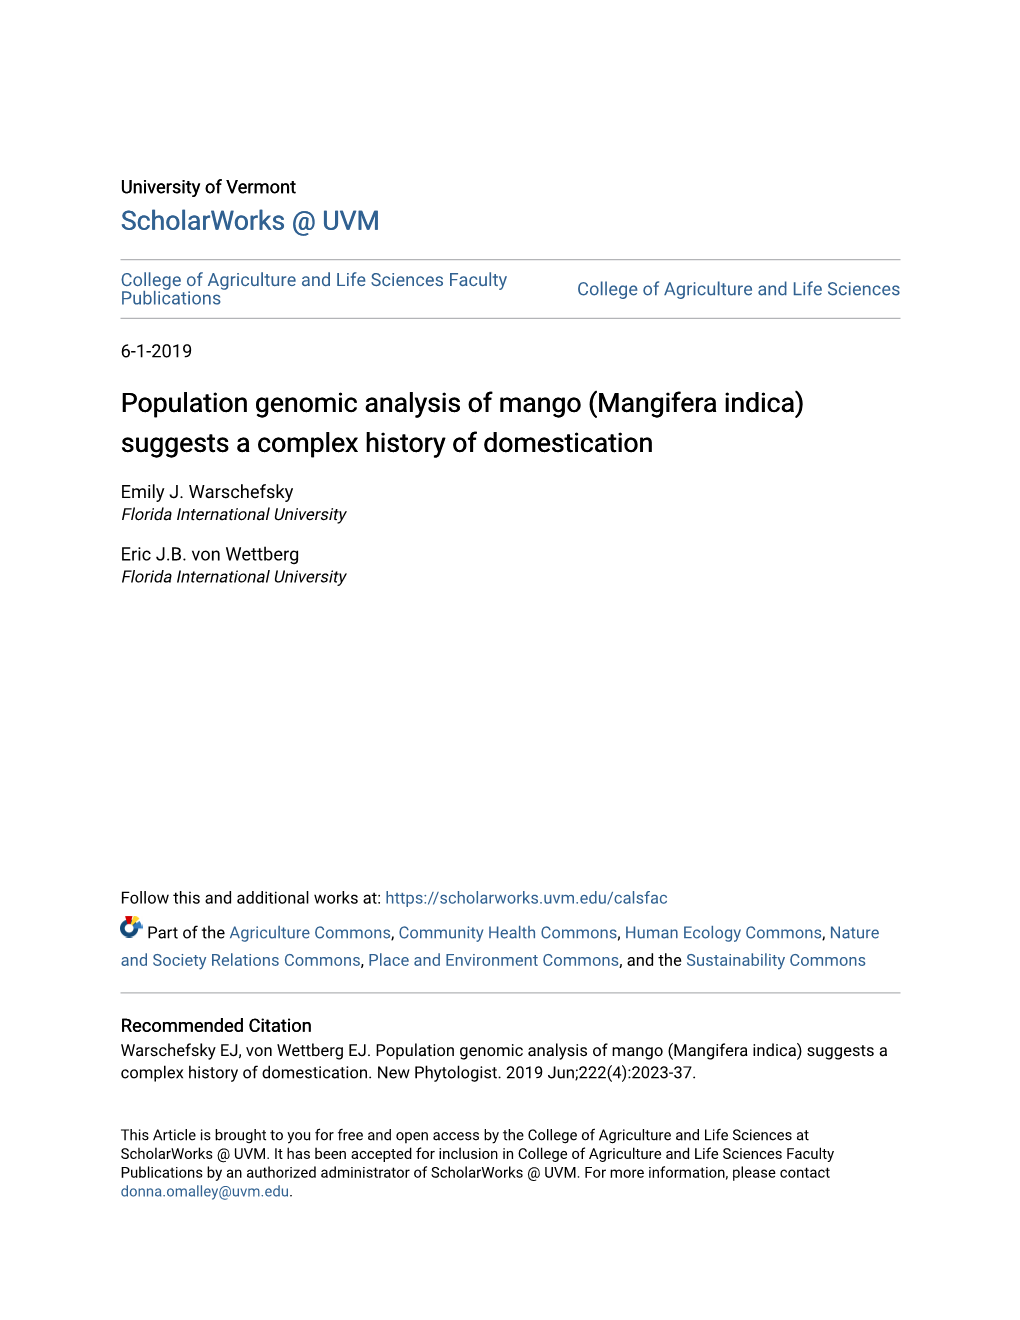 Population Genomic Analysis of Mango (Mangifera Indica) Suggests a Complex History of Domestication